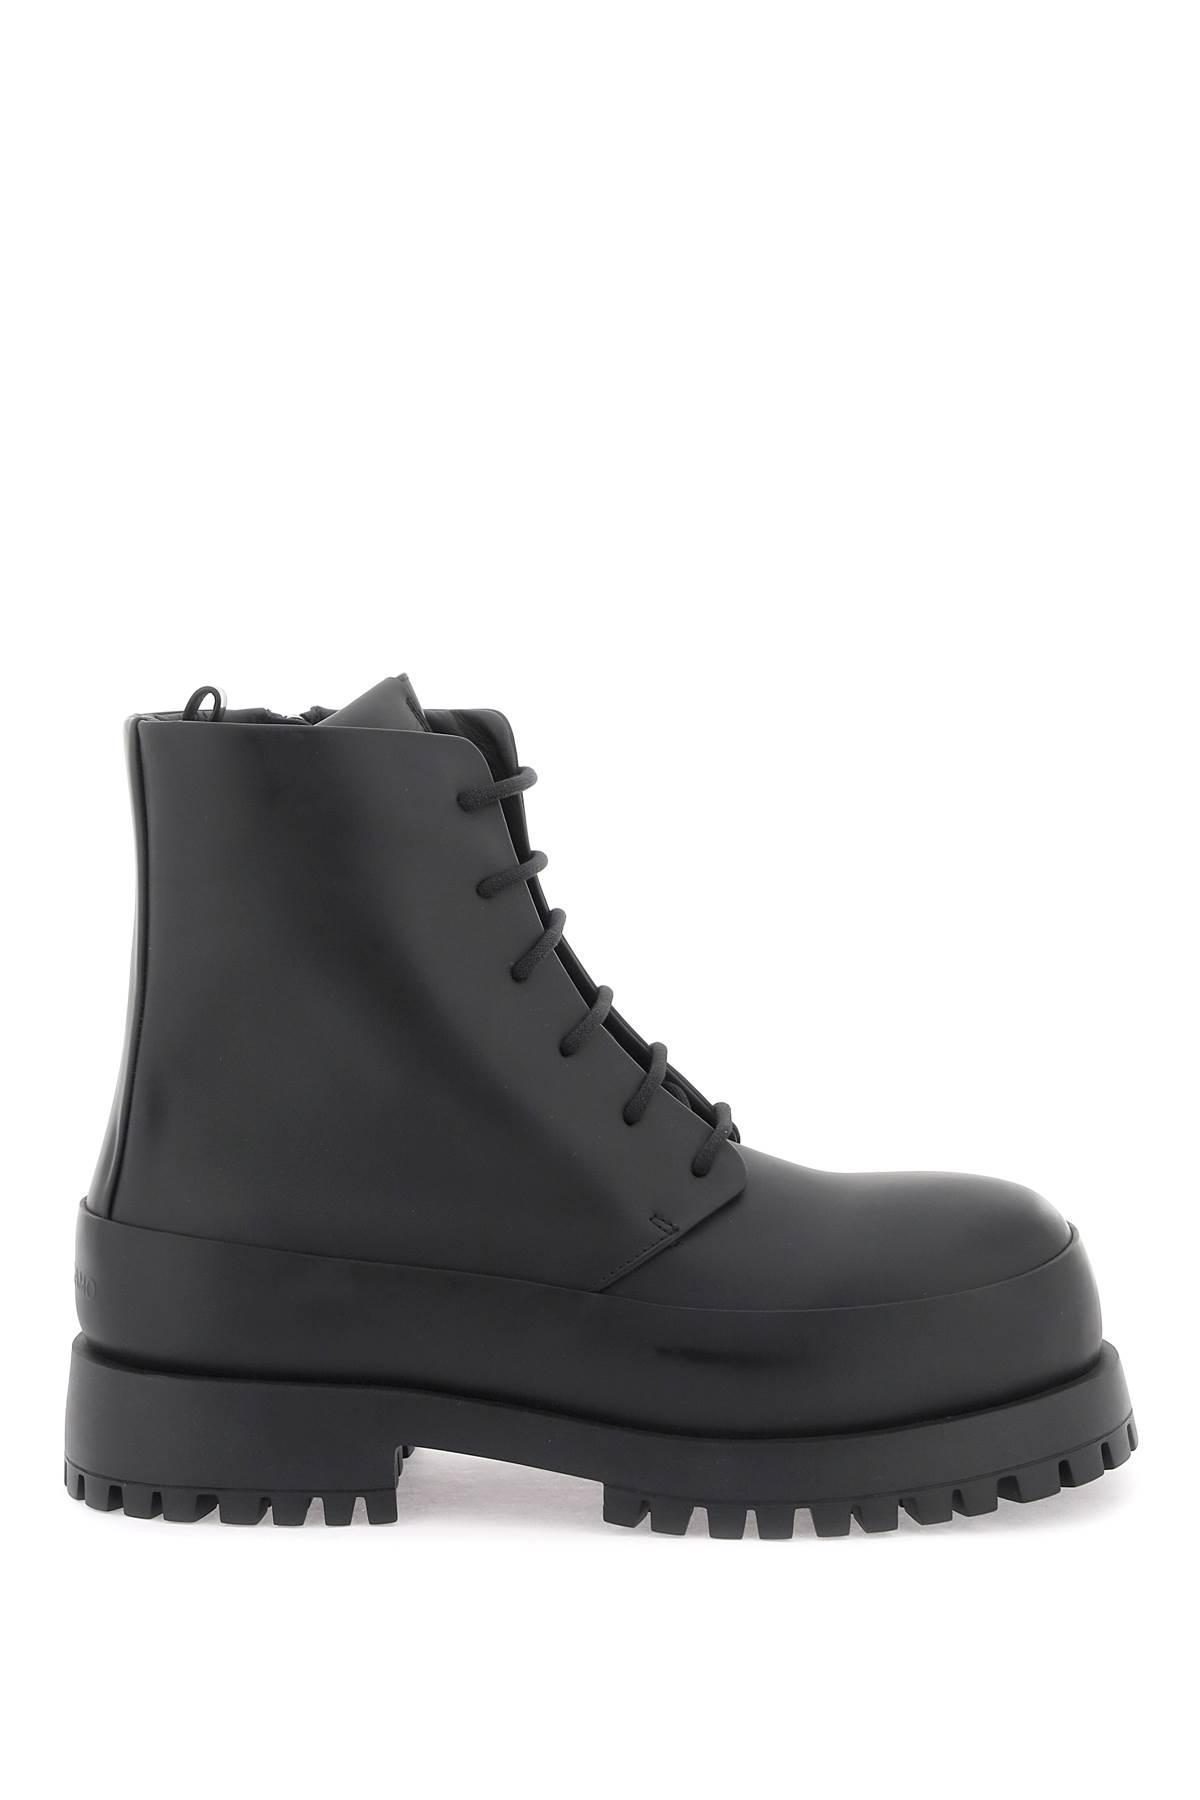 Ferragamo Rubberized Leather Combat Boots in Black for Men | Lyst